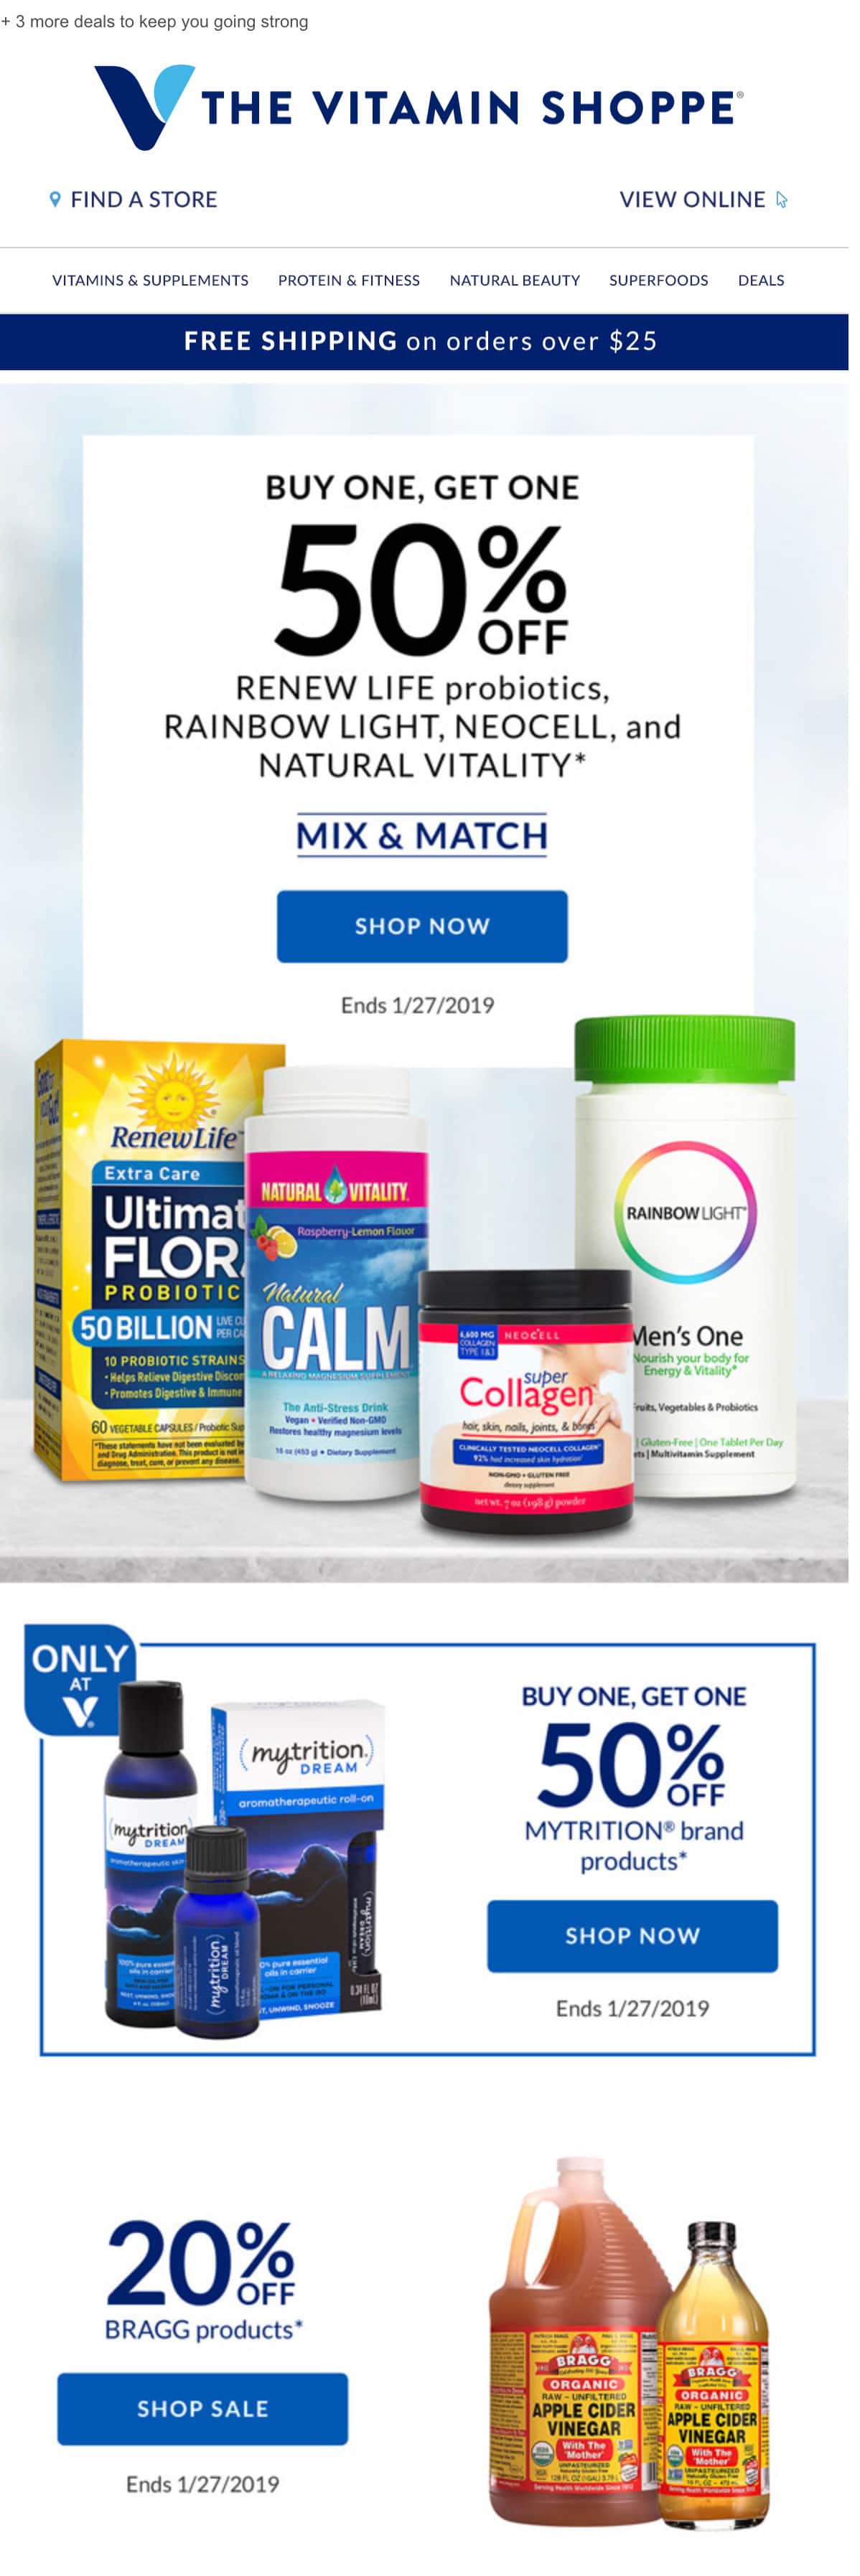 Vitamin Shoppe image-heavy email 2019